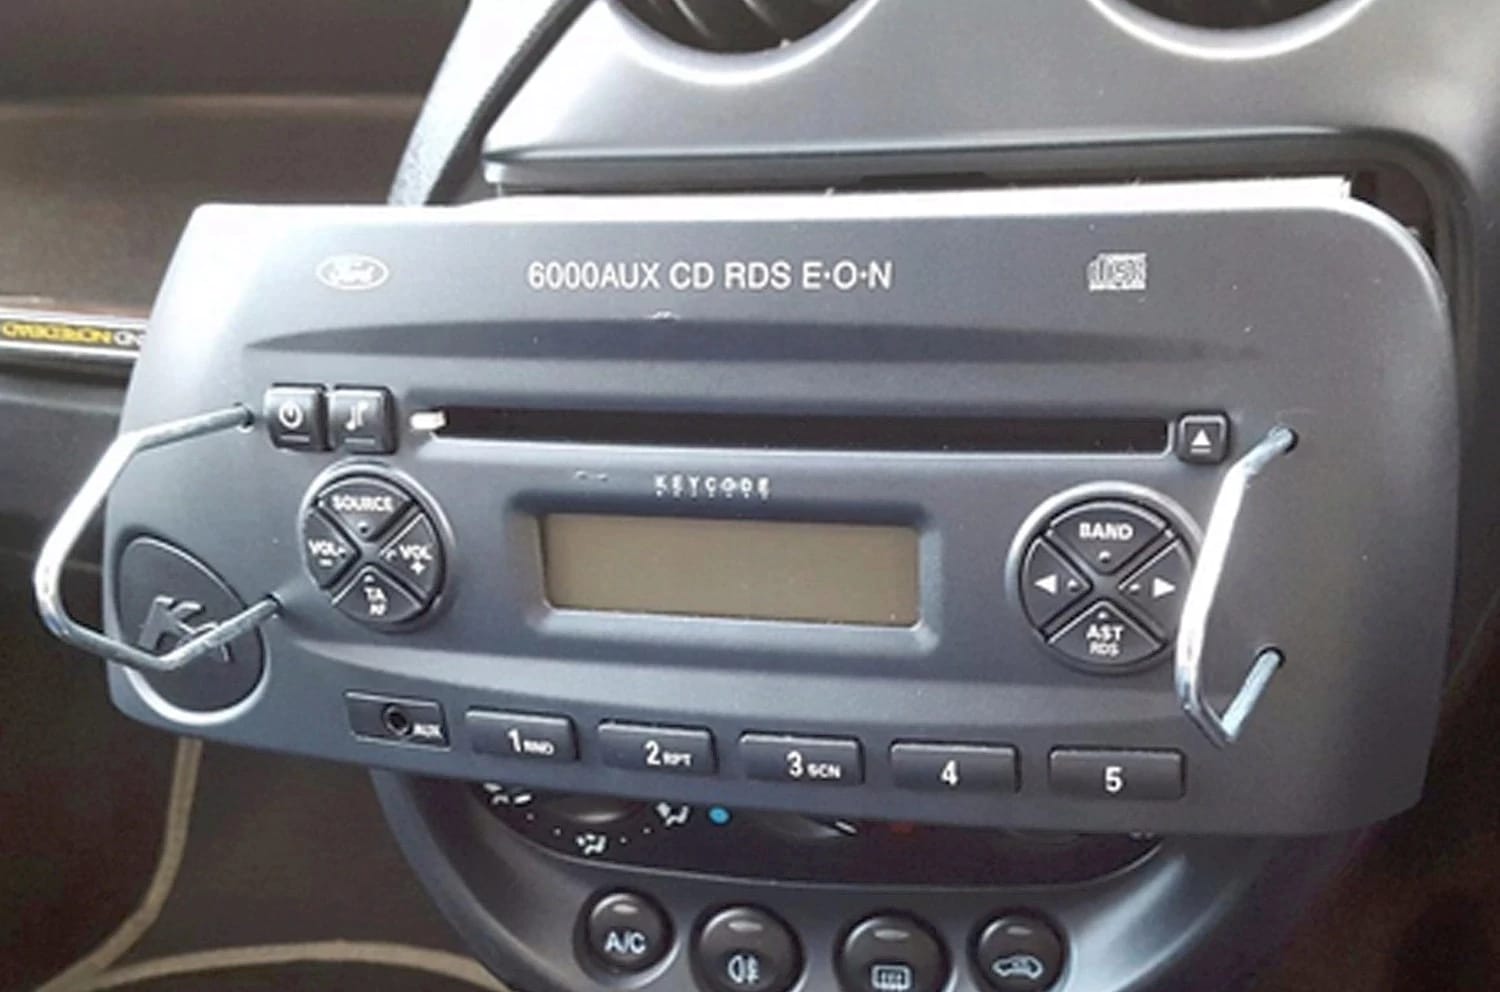 Removing a standard radio with radio removal keys